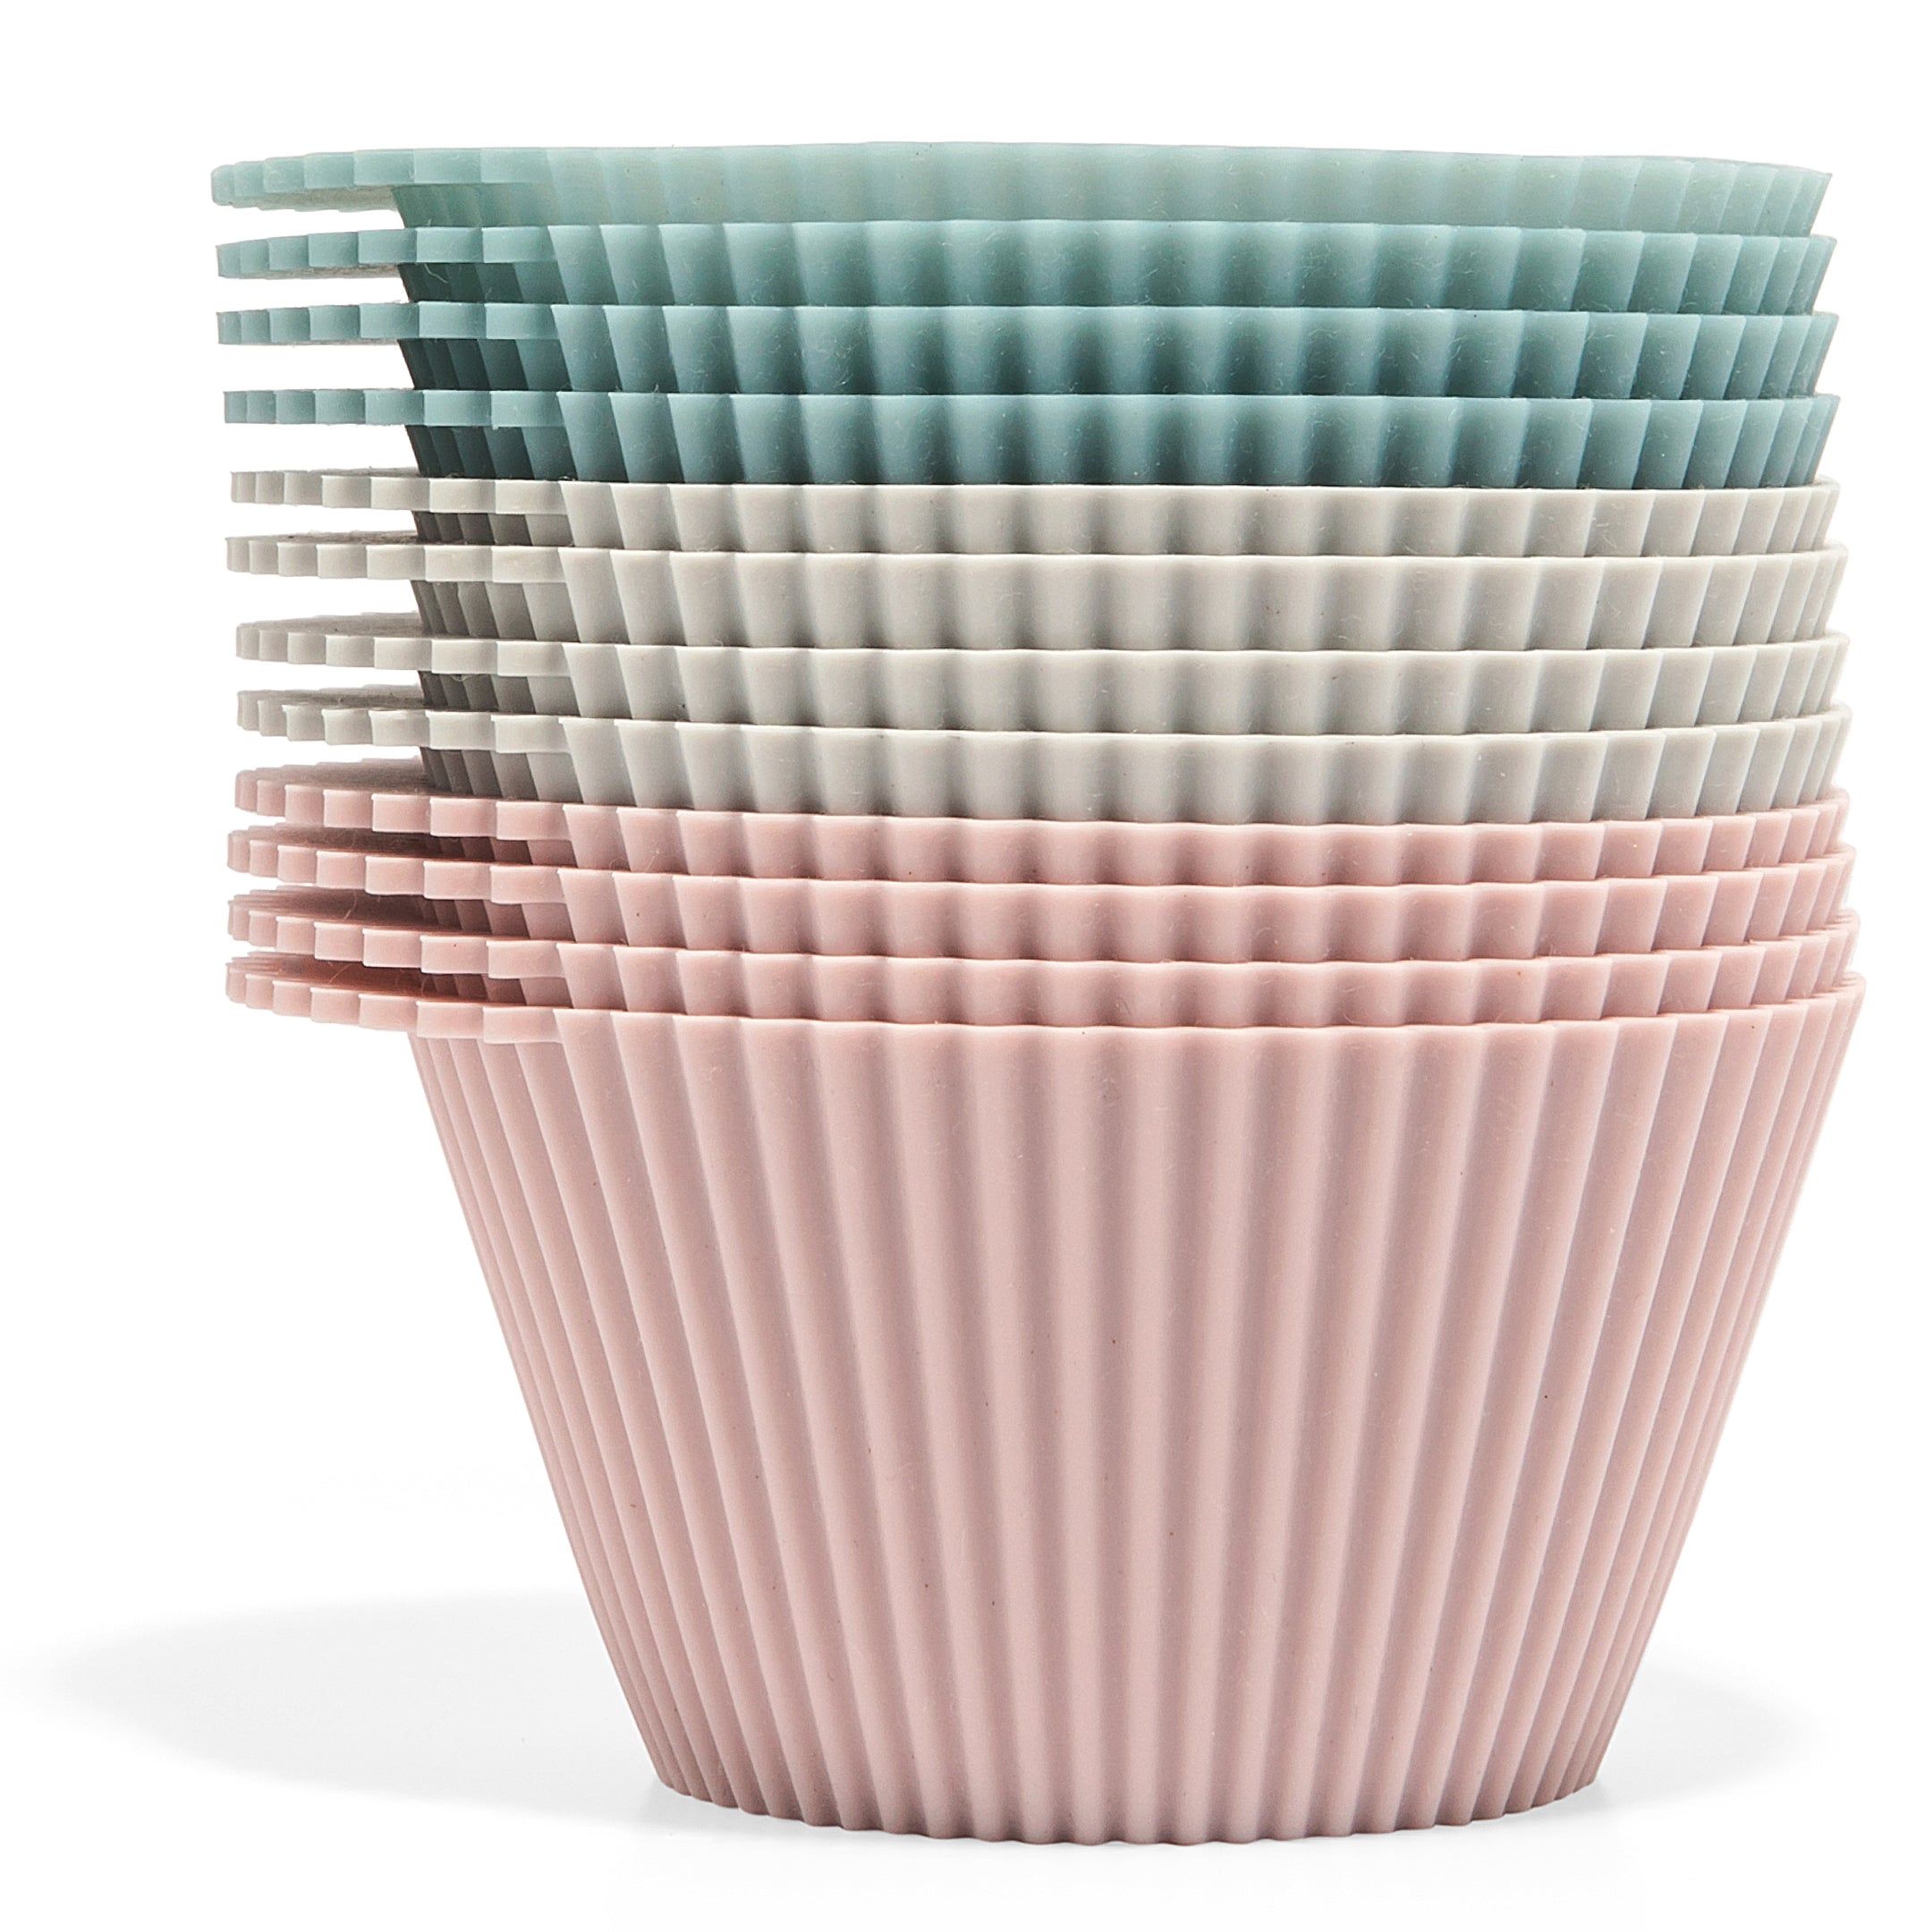 Travelwant 24Pcs/Set Heat-resistant Silicone Baking Cups Jumbo